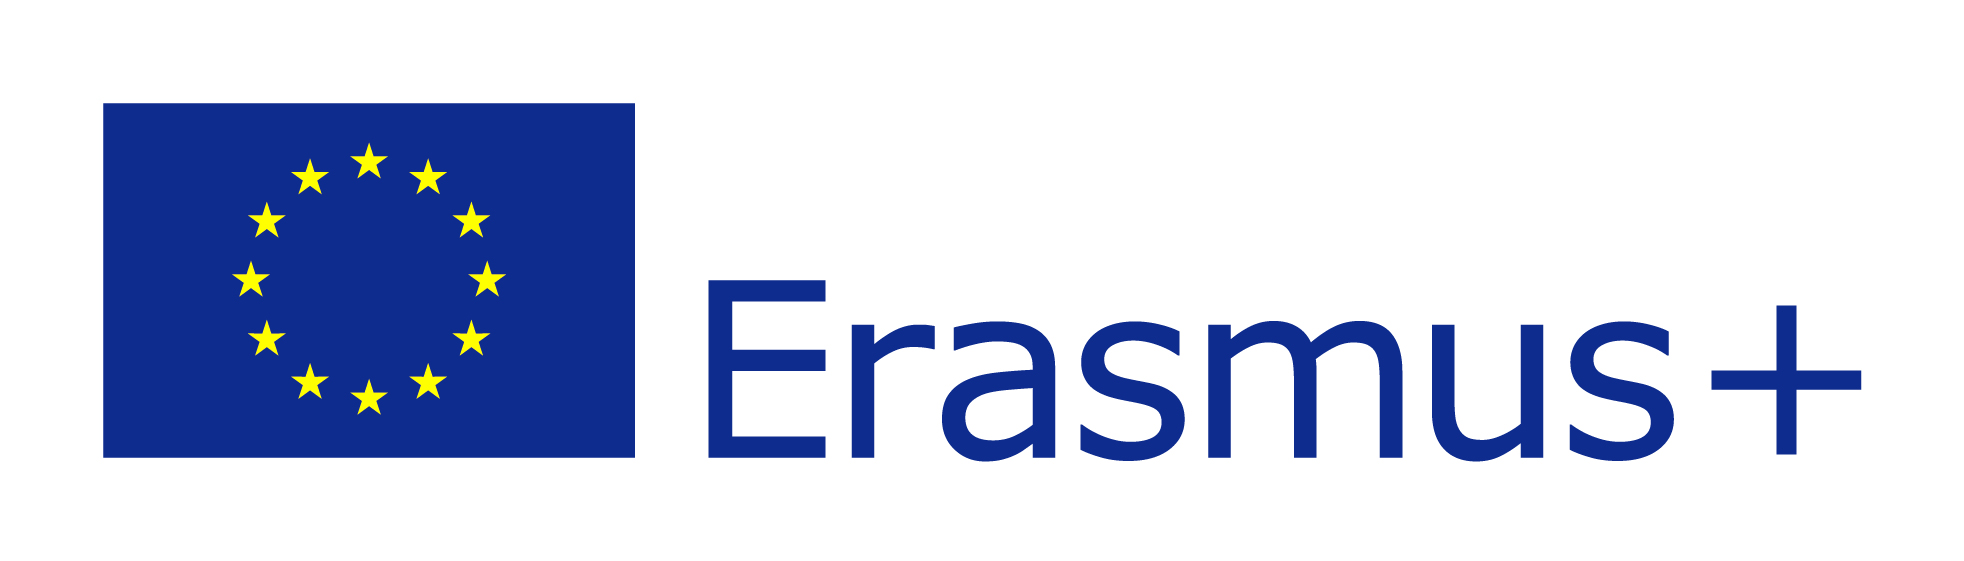 Erasmus Outside - votazioni logo